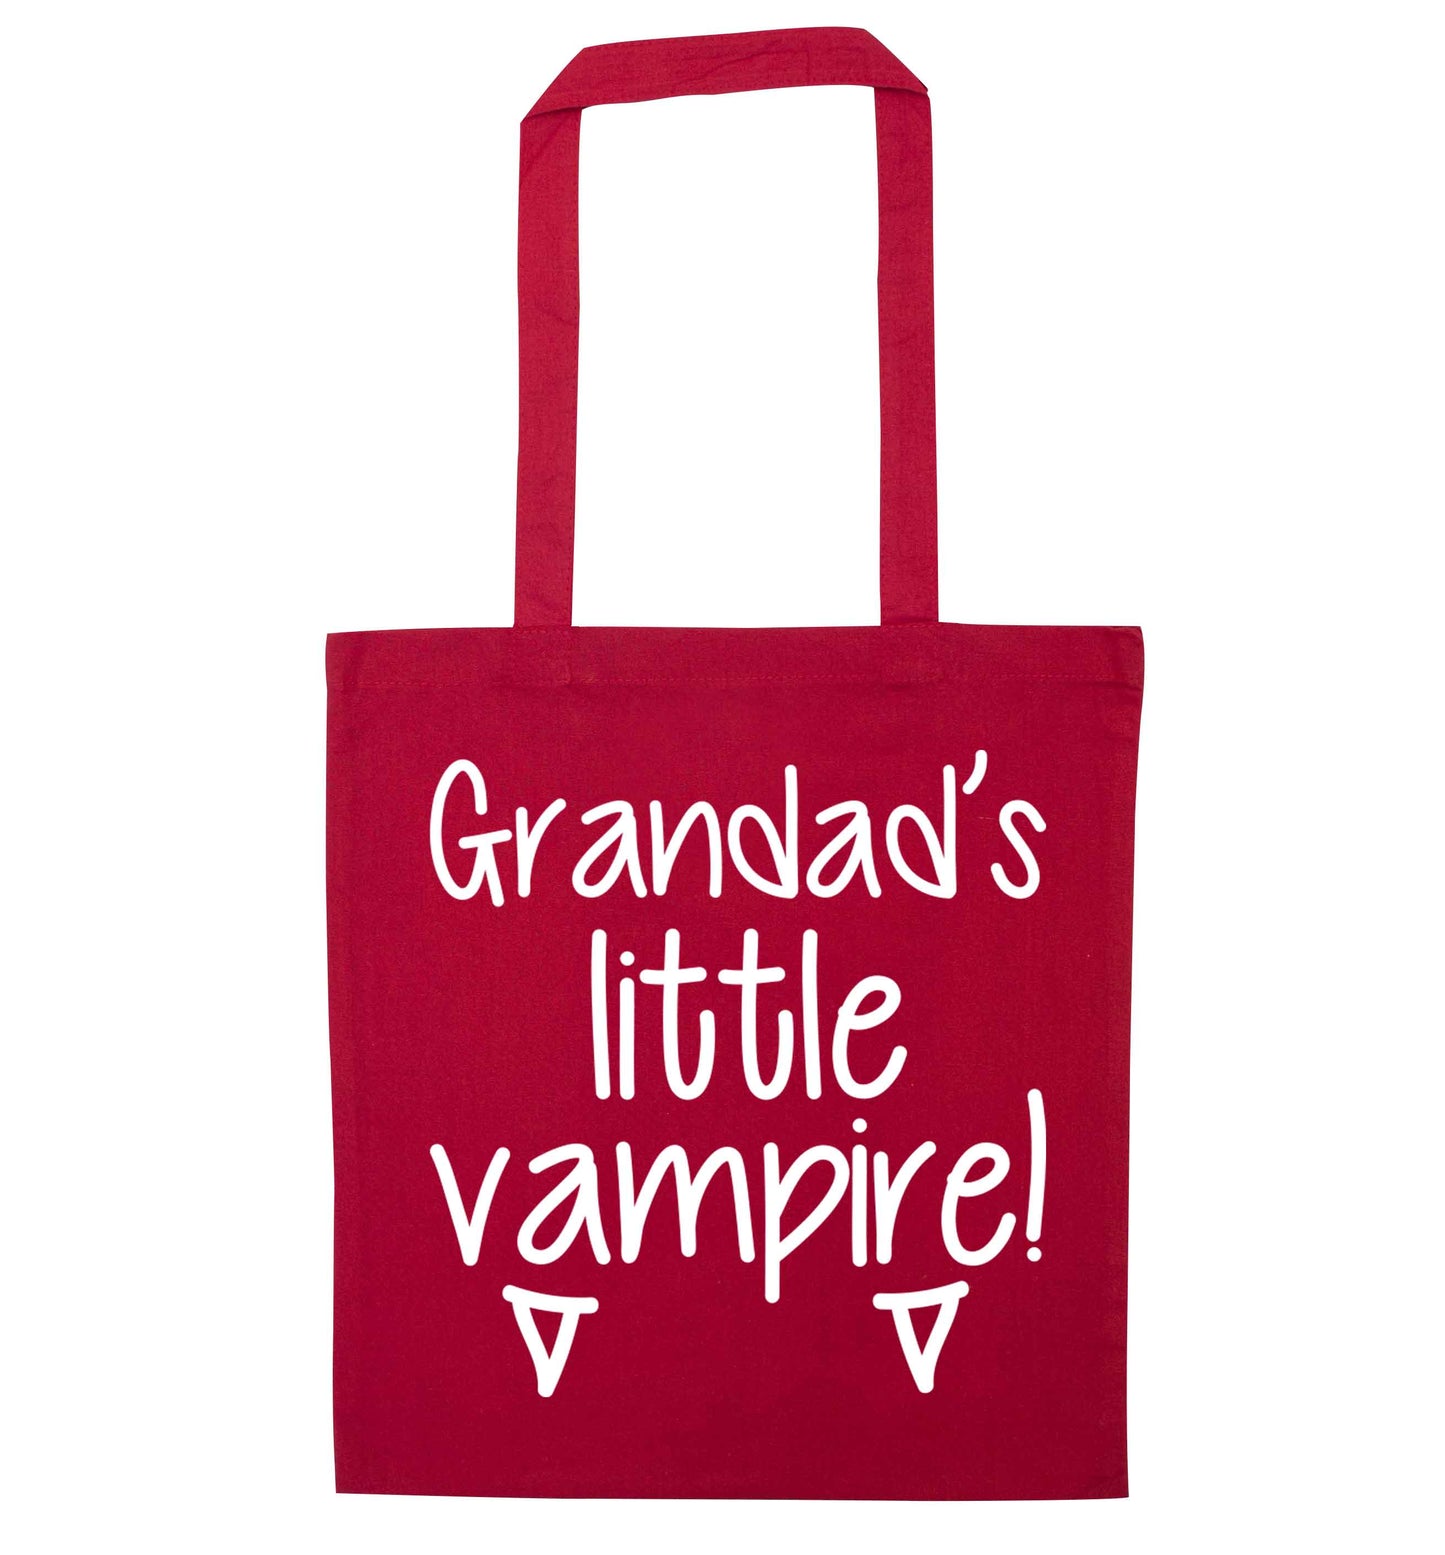 Grandad's little vampire red tote bag